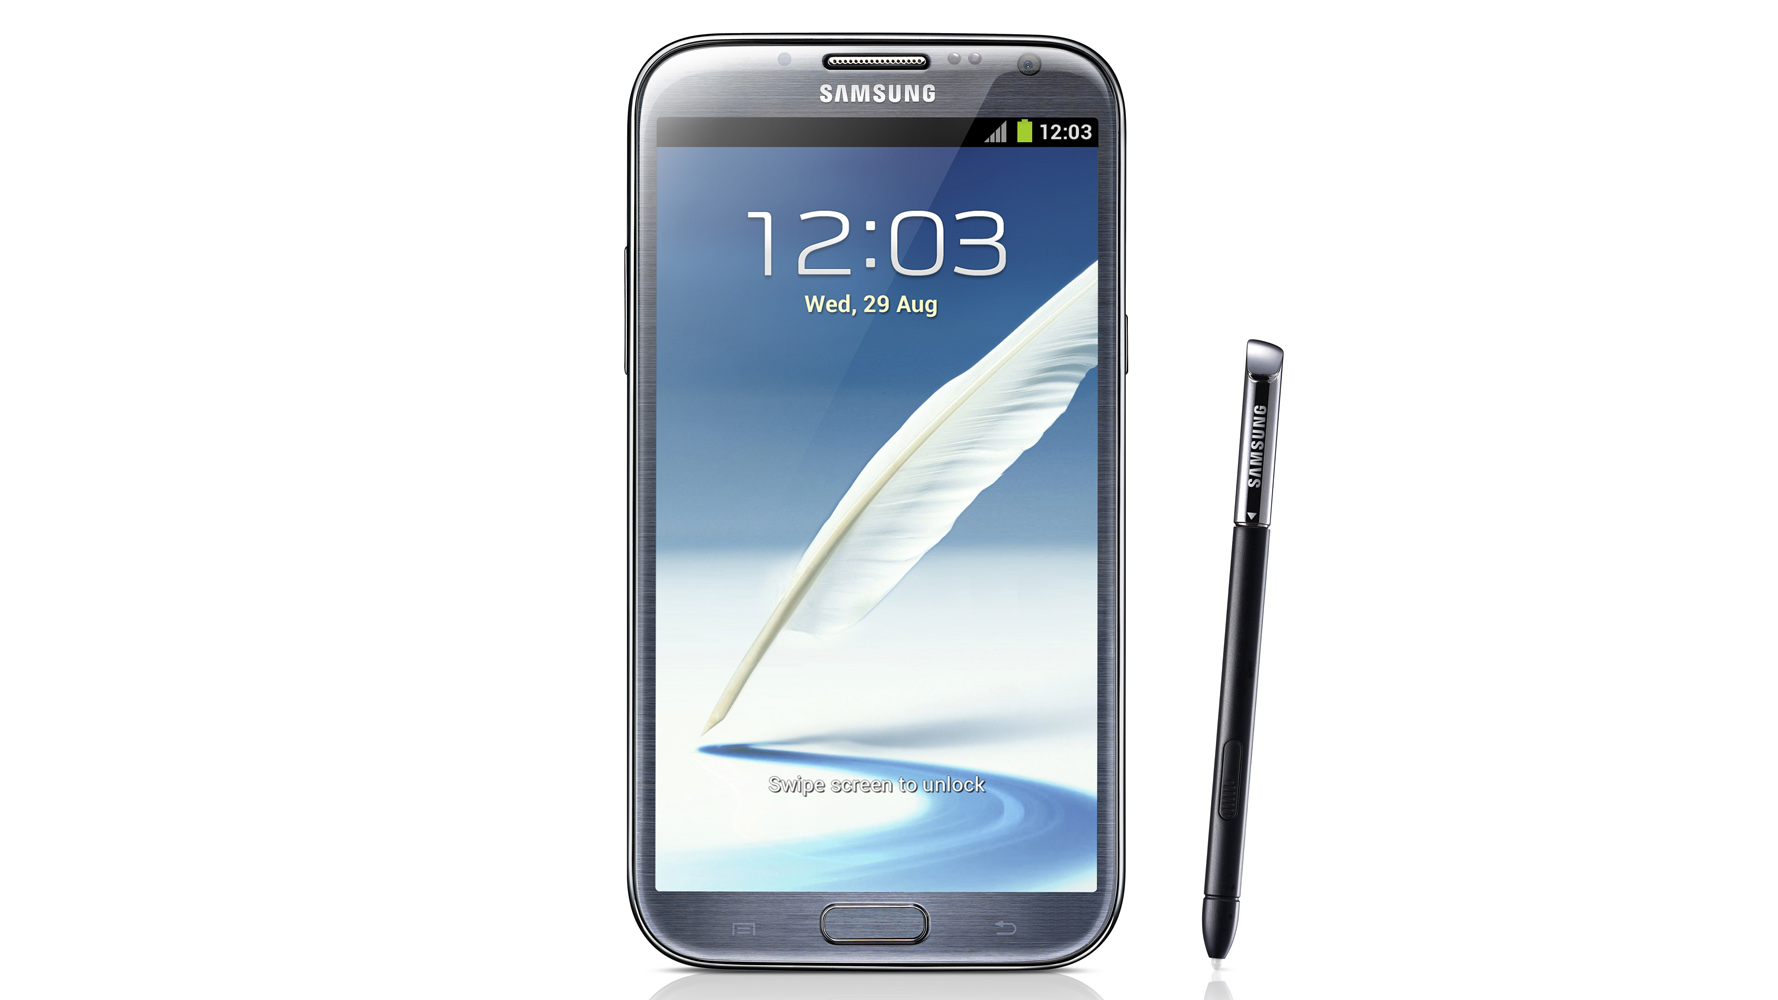 Samsung Galaxy Note 2 review - TechRadar